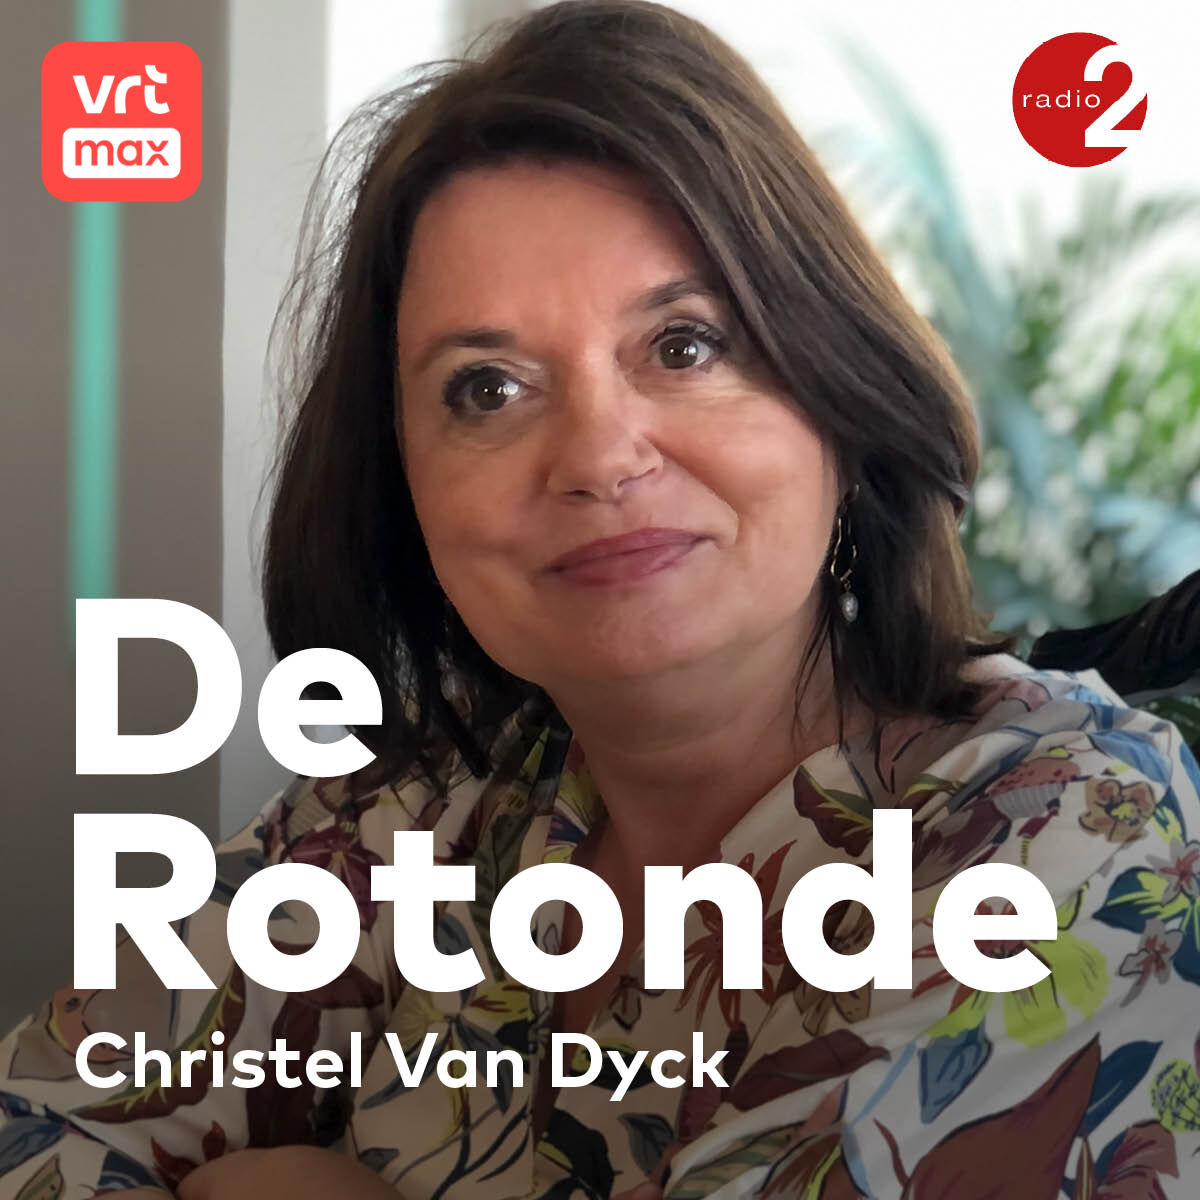 De Rotonde... Christel Van Dyck